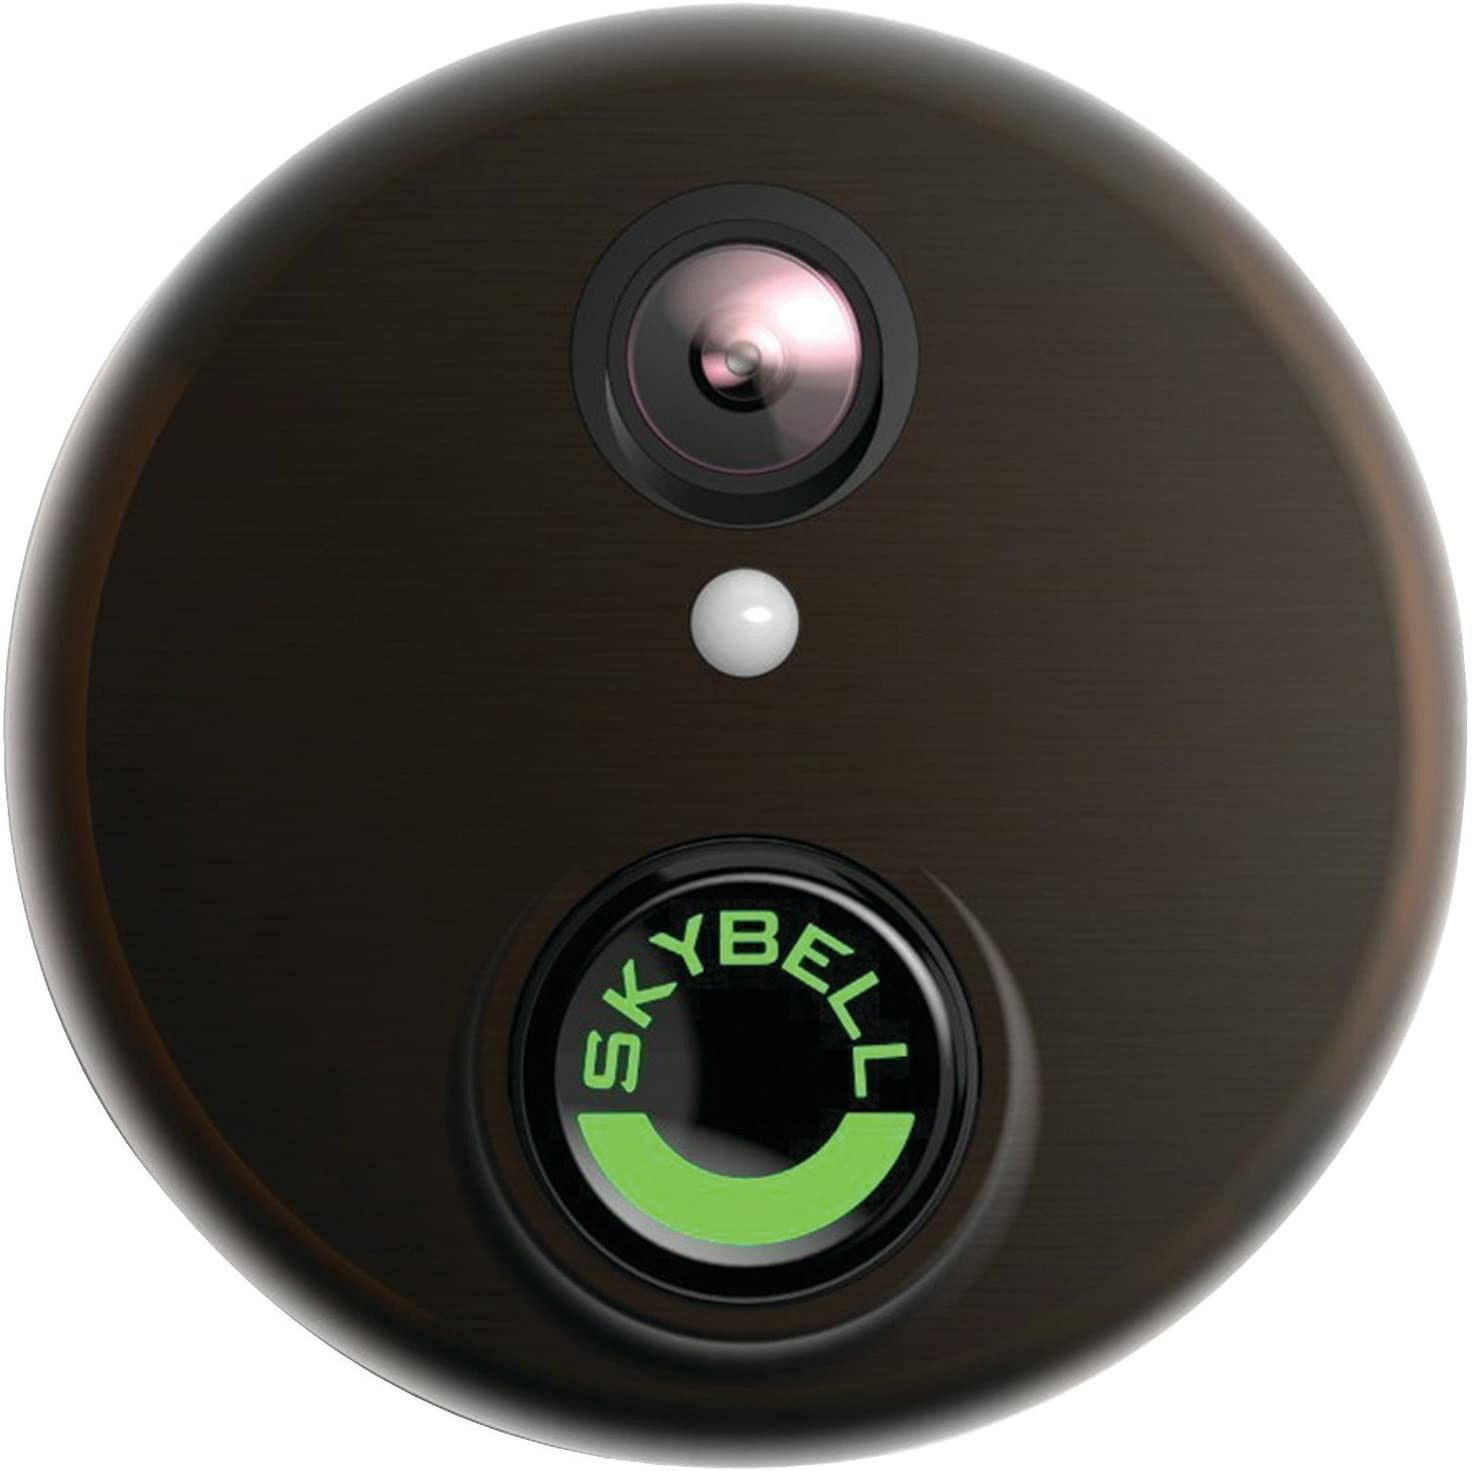 Skybell HD video doorbell